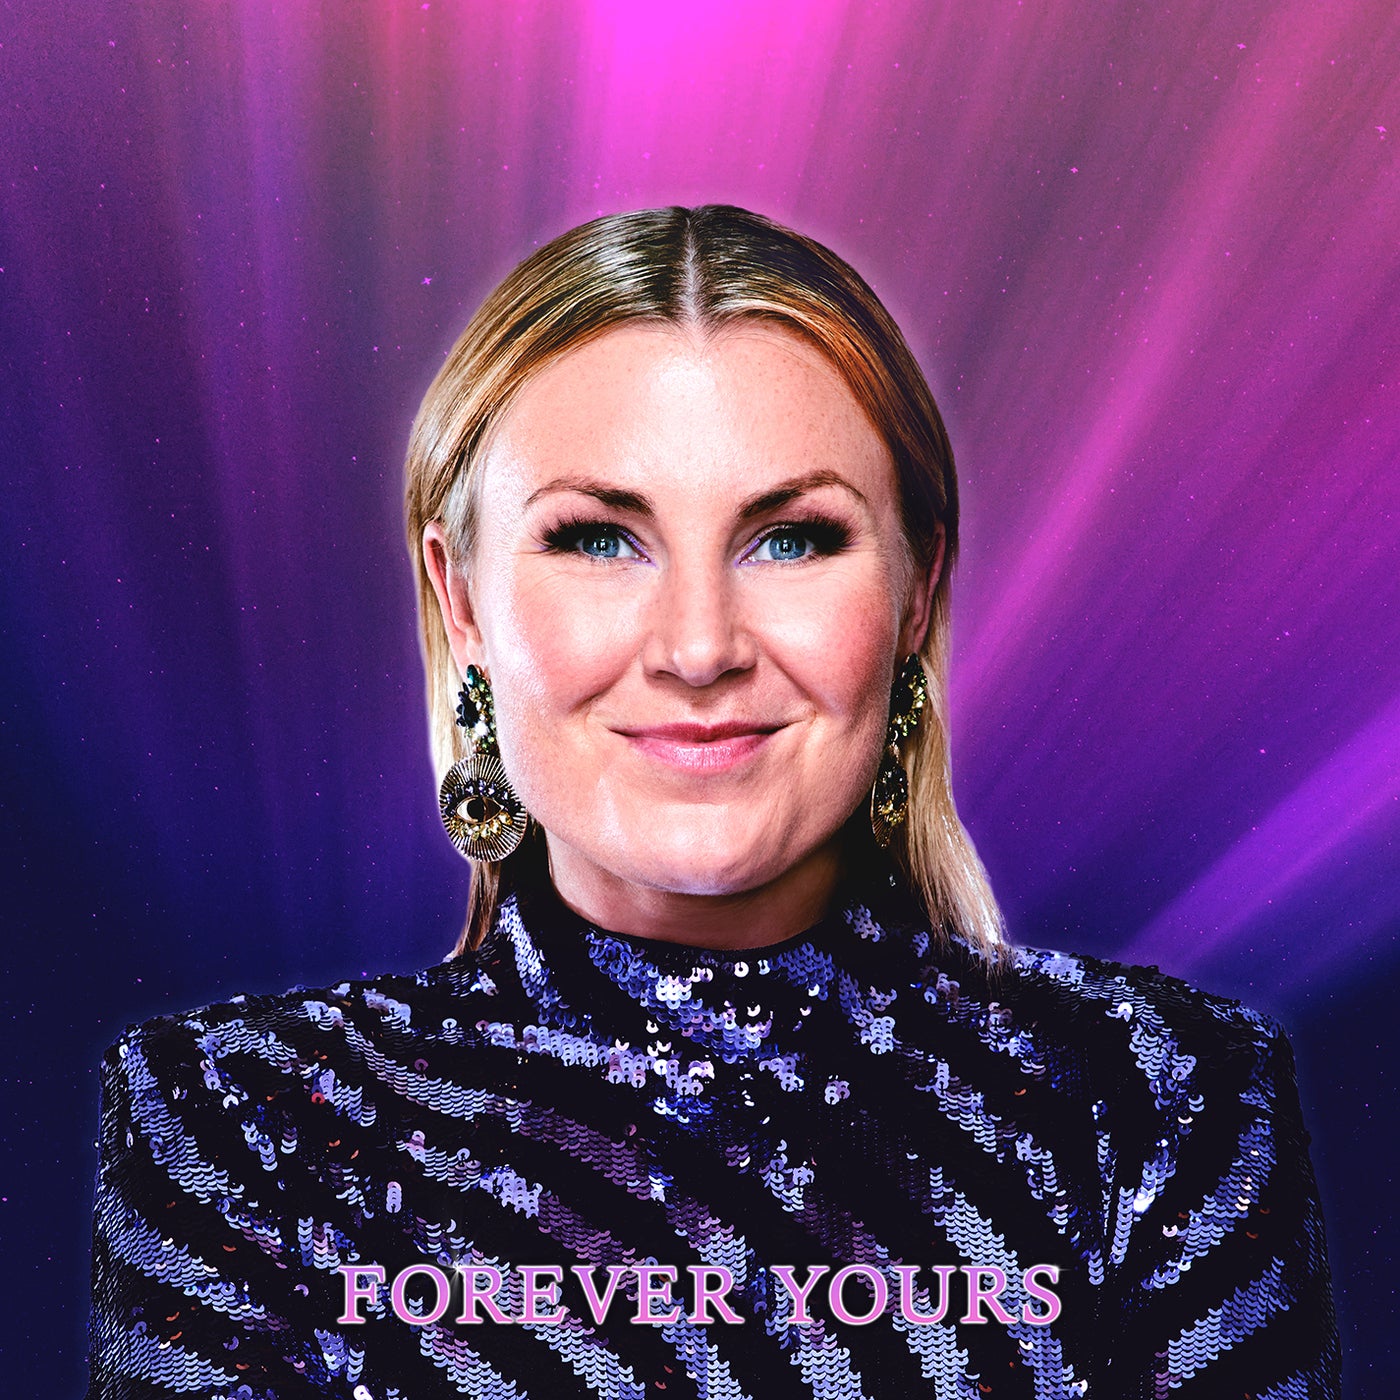 Forever Yours by Elisa Lindström on Beatsource